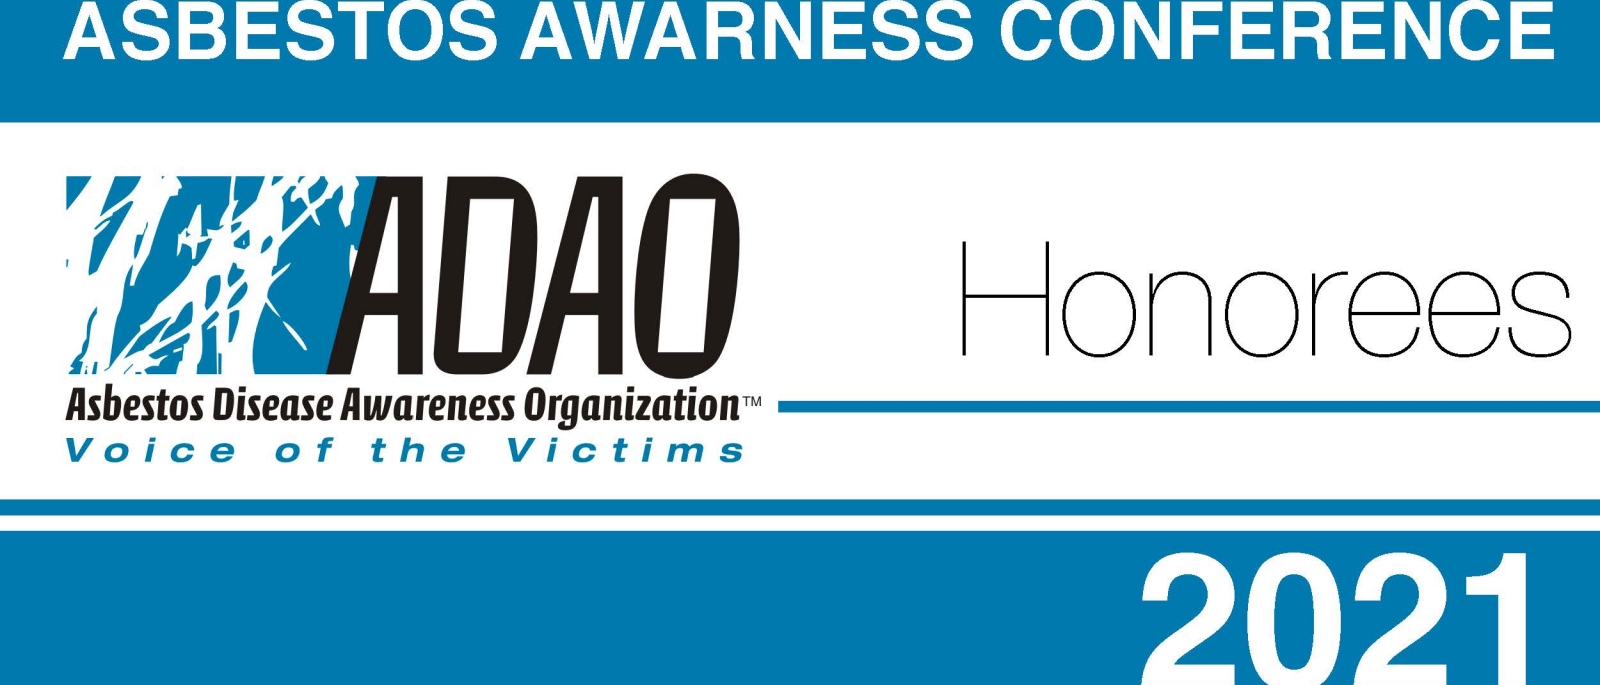 The 2021 ADAO Asbestos Awareness Conference